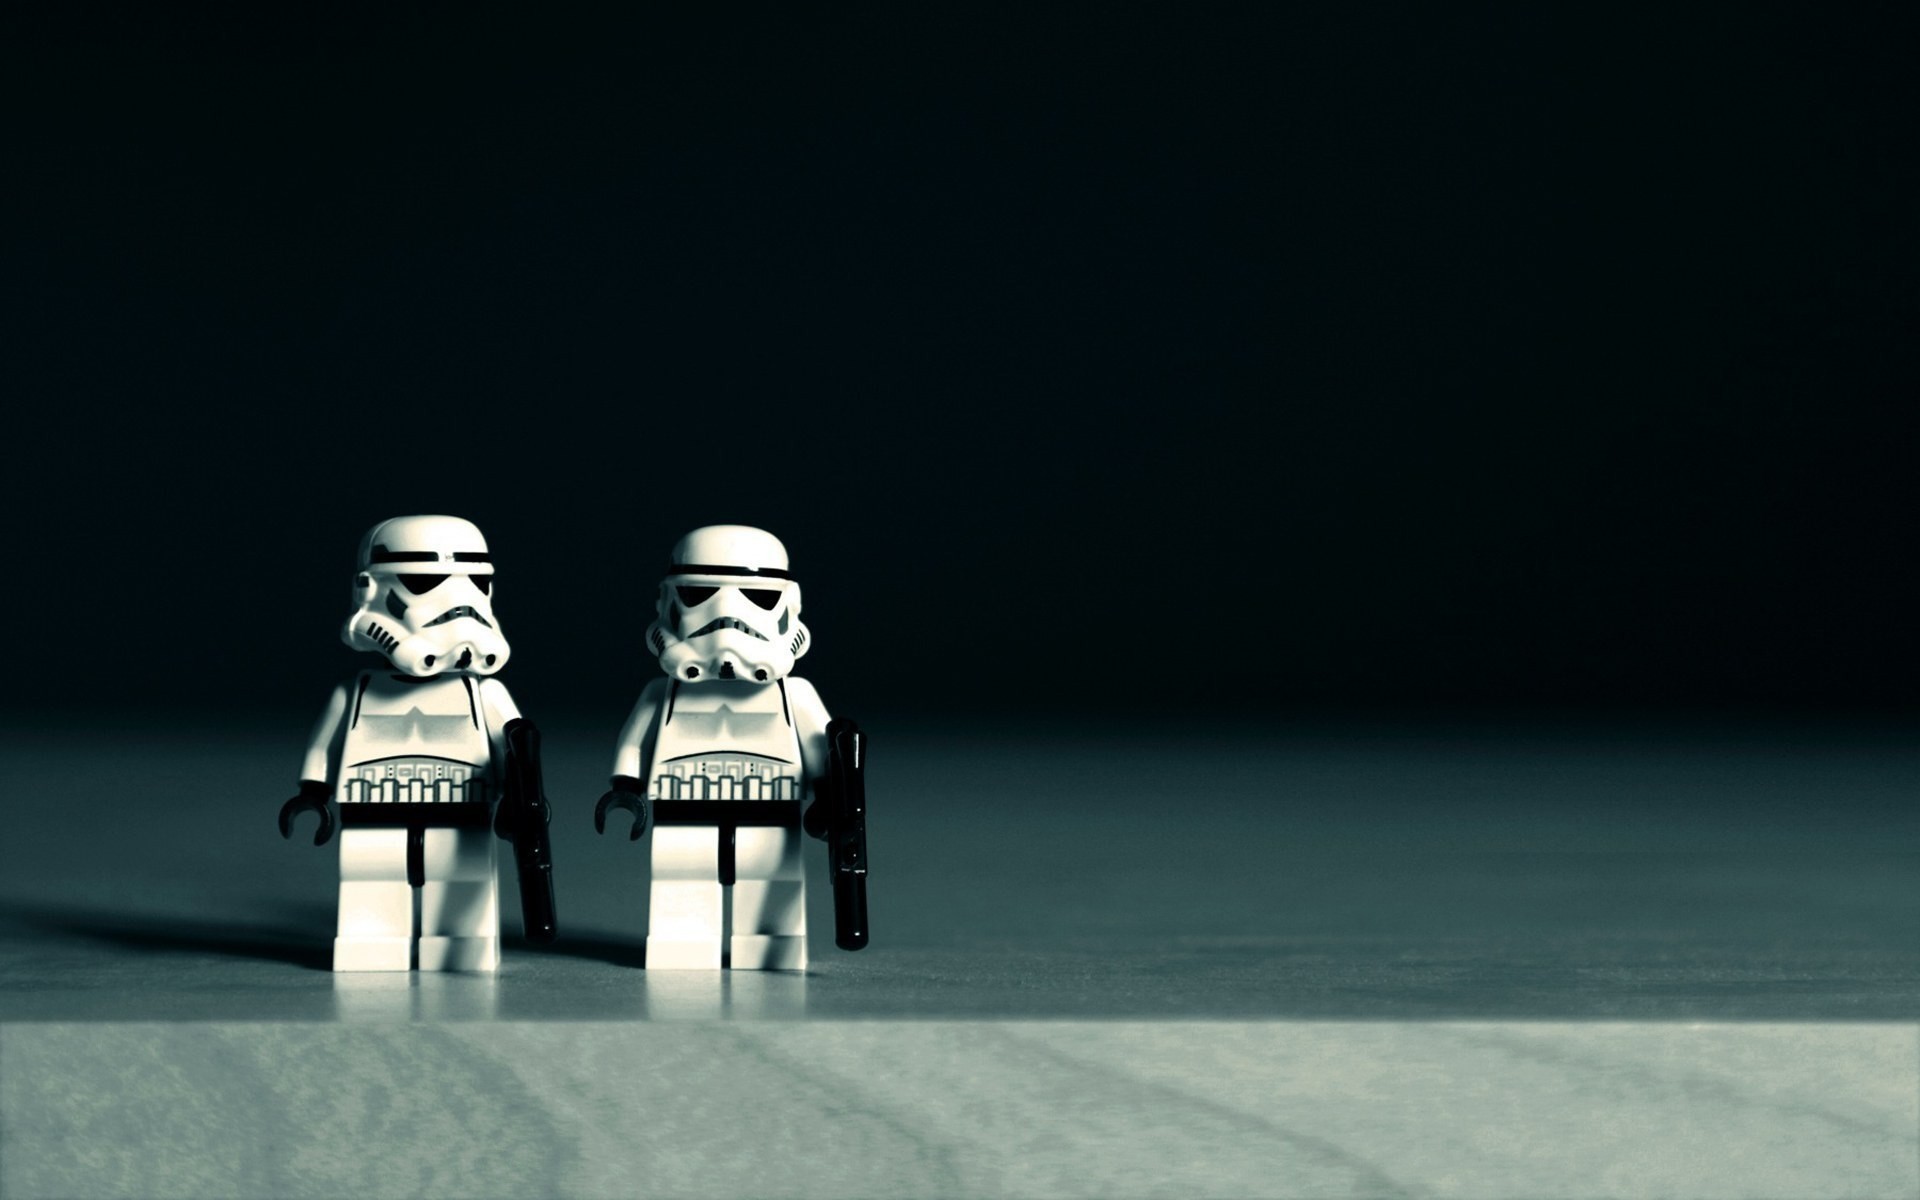 Image – Star wars stormtroopers toys macro lego hd wallpaper Lego Star Wars Wiki FANDOM powered by Wikia